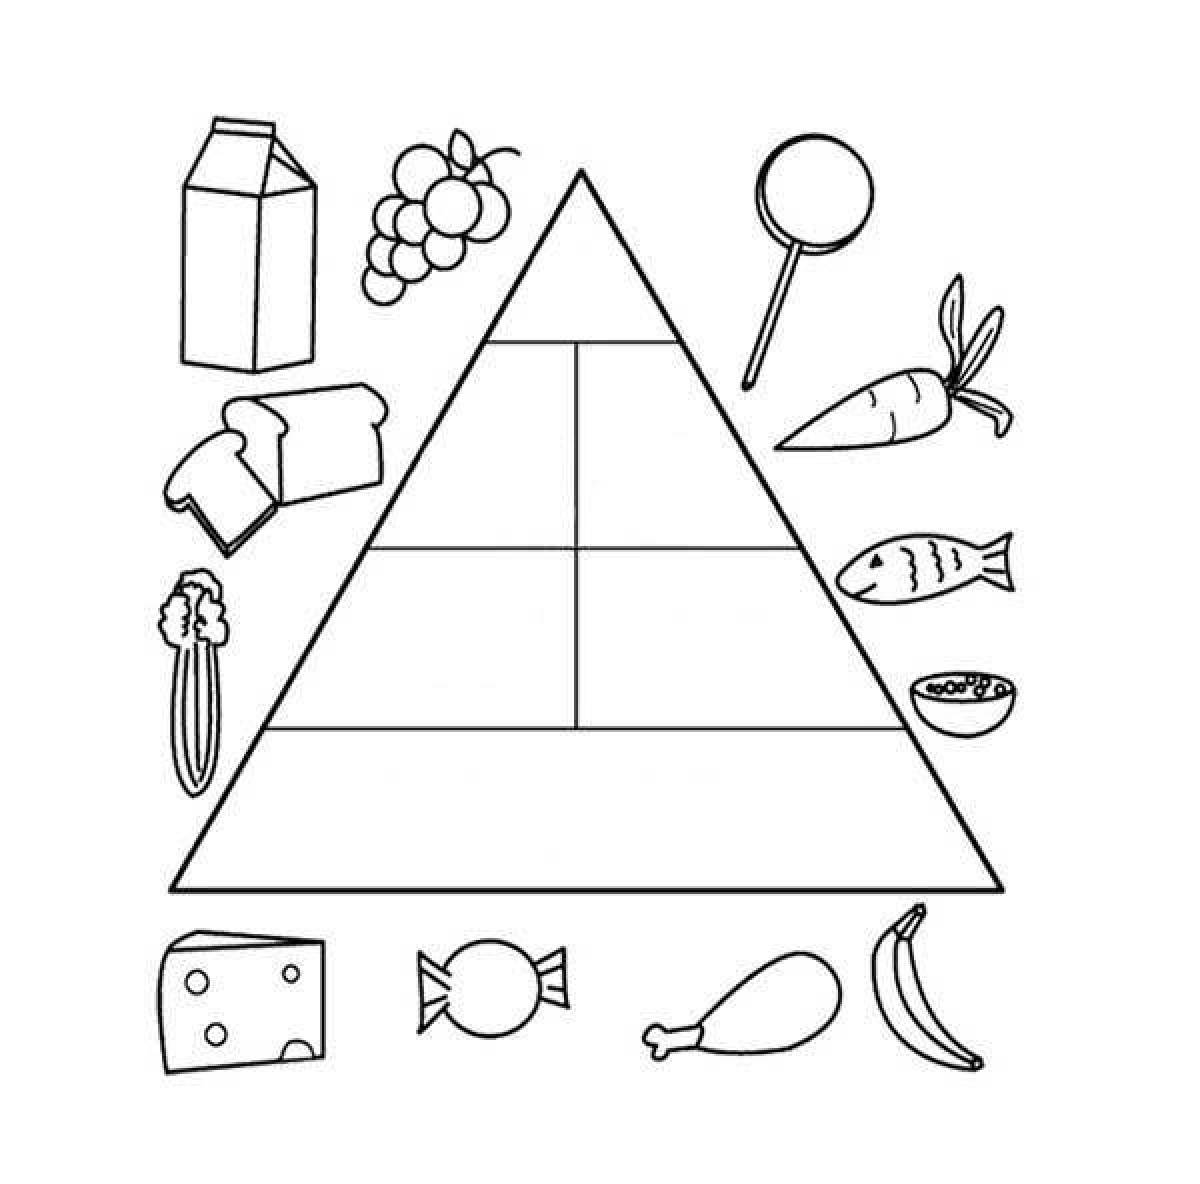 Colorful food pyramid coloring book